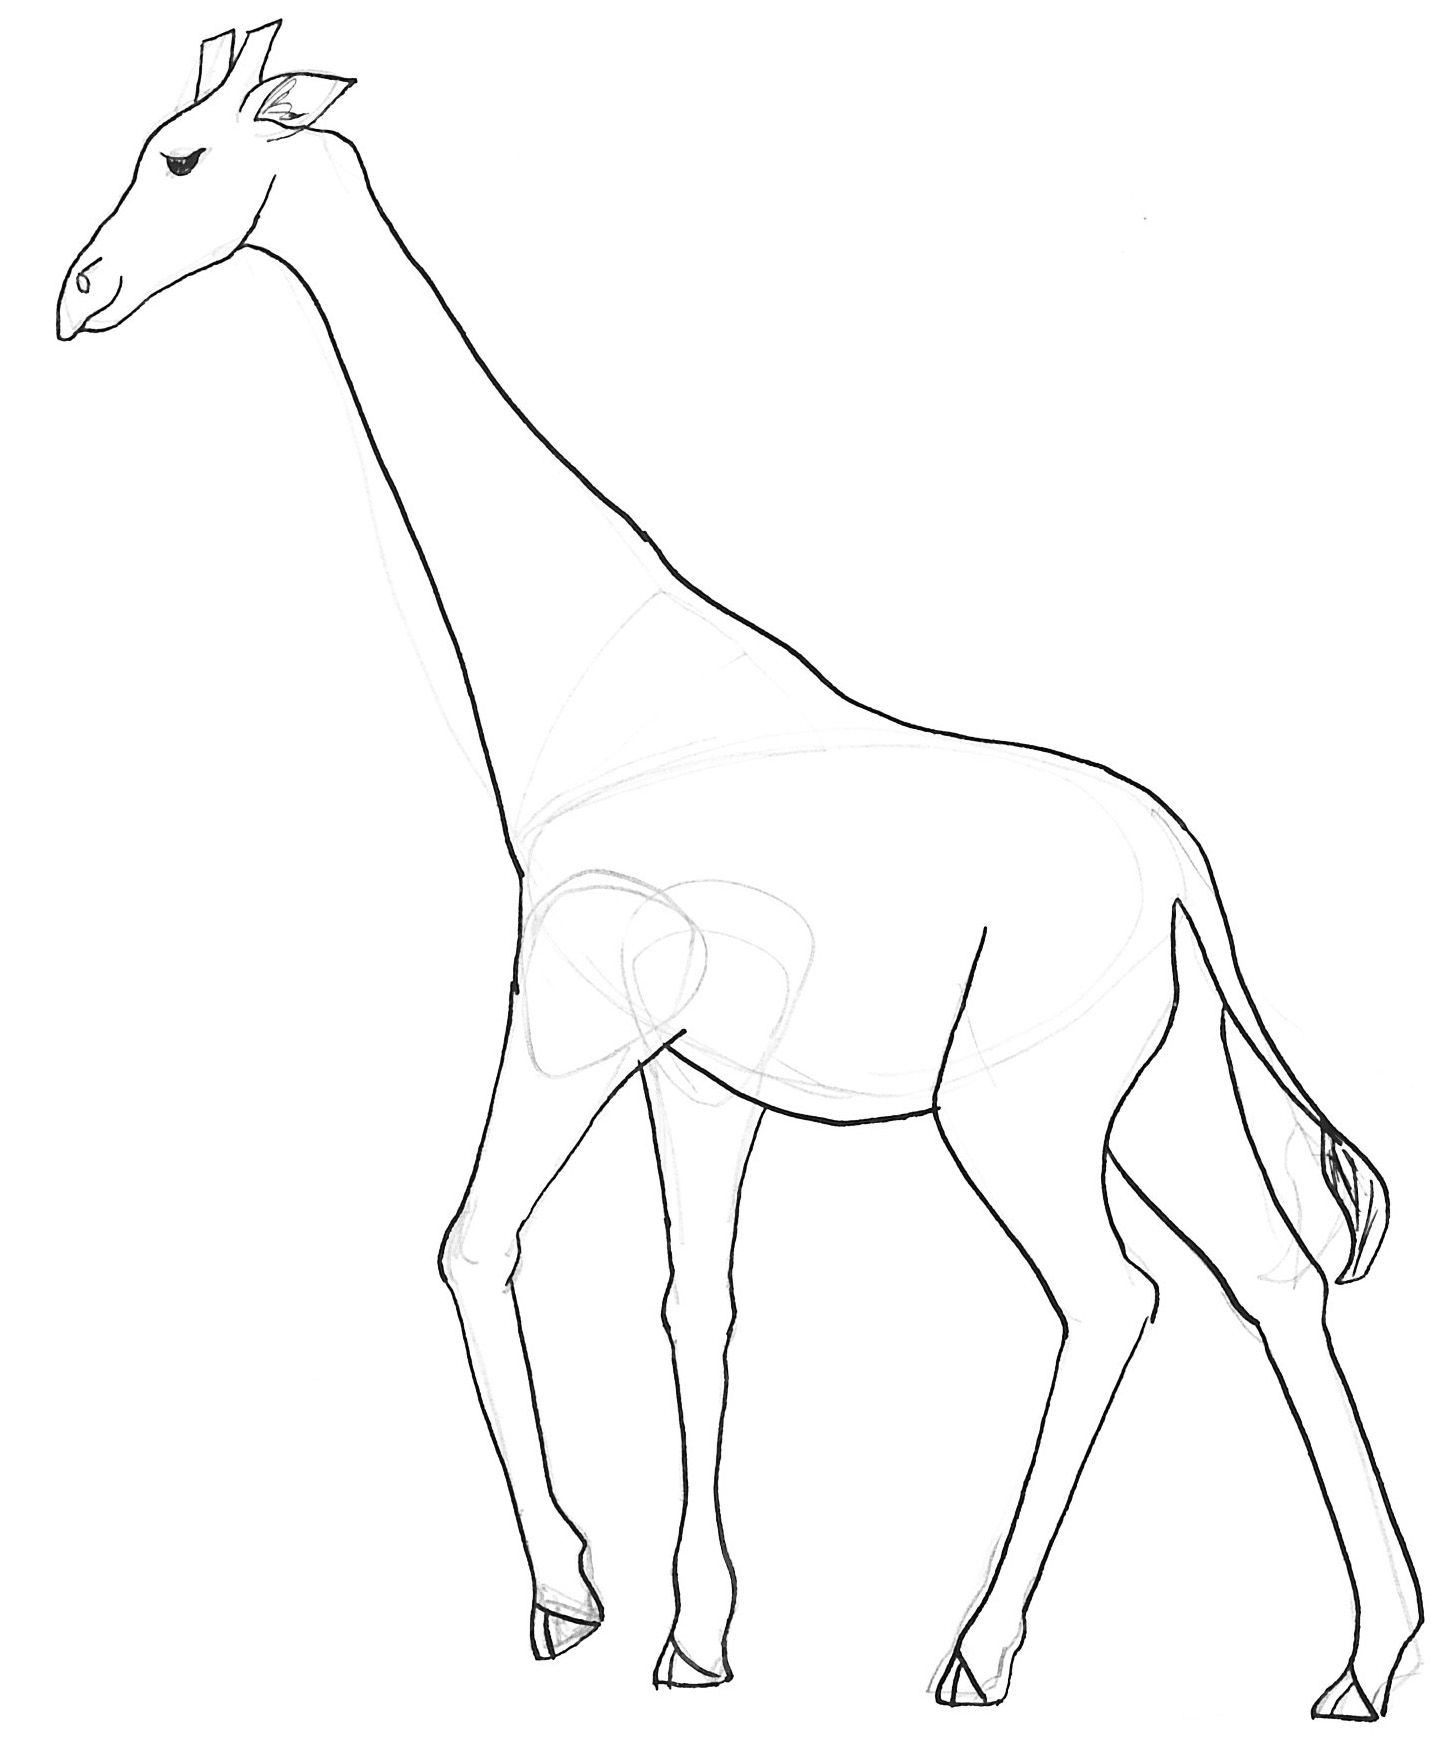 Free Giraffe Line Drawing, Download Free Giraffe Line Drawing png